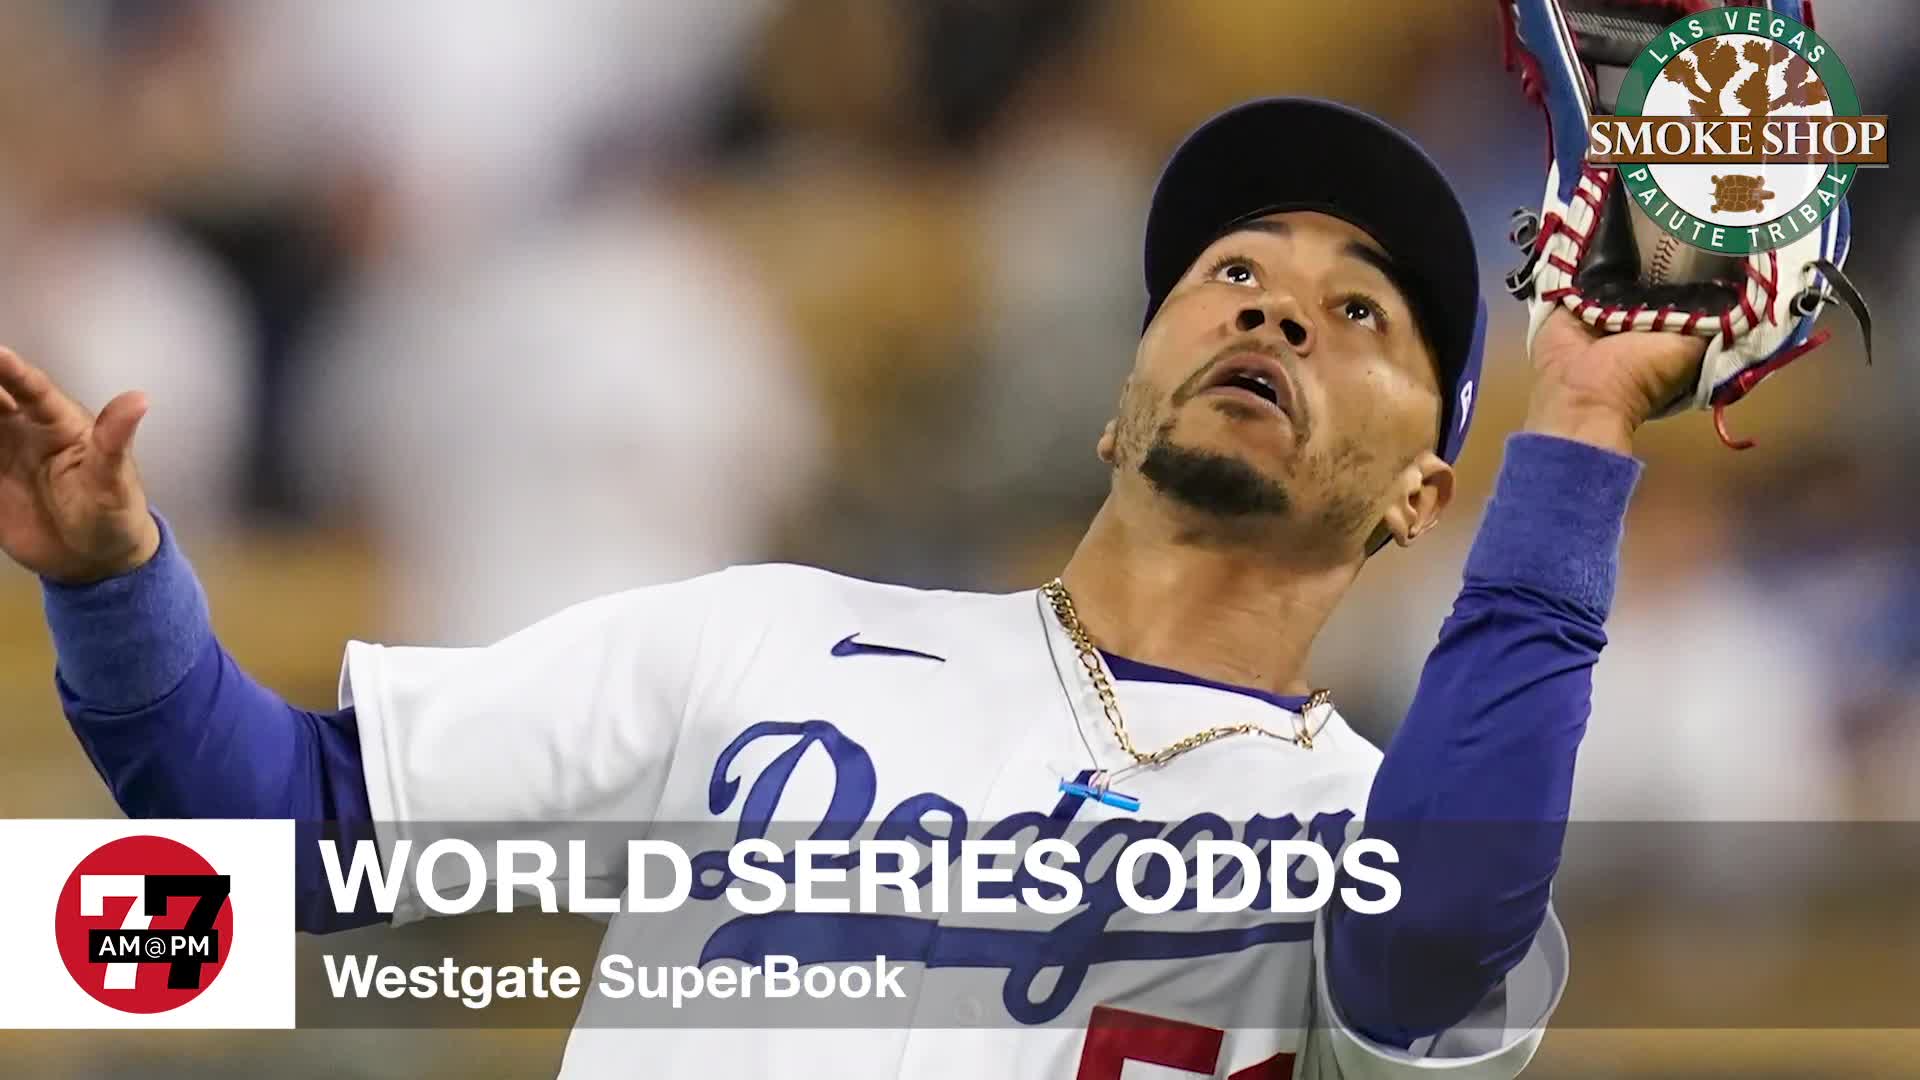 7@7PM World Series Odds